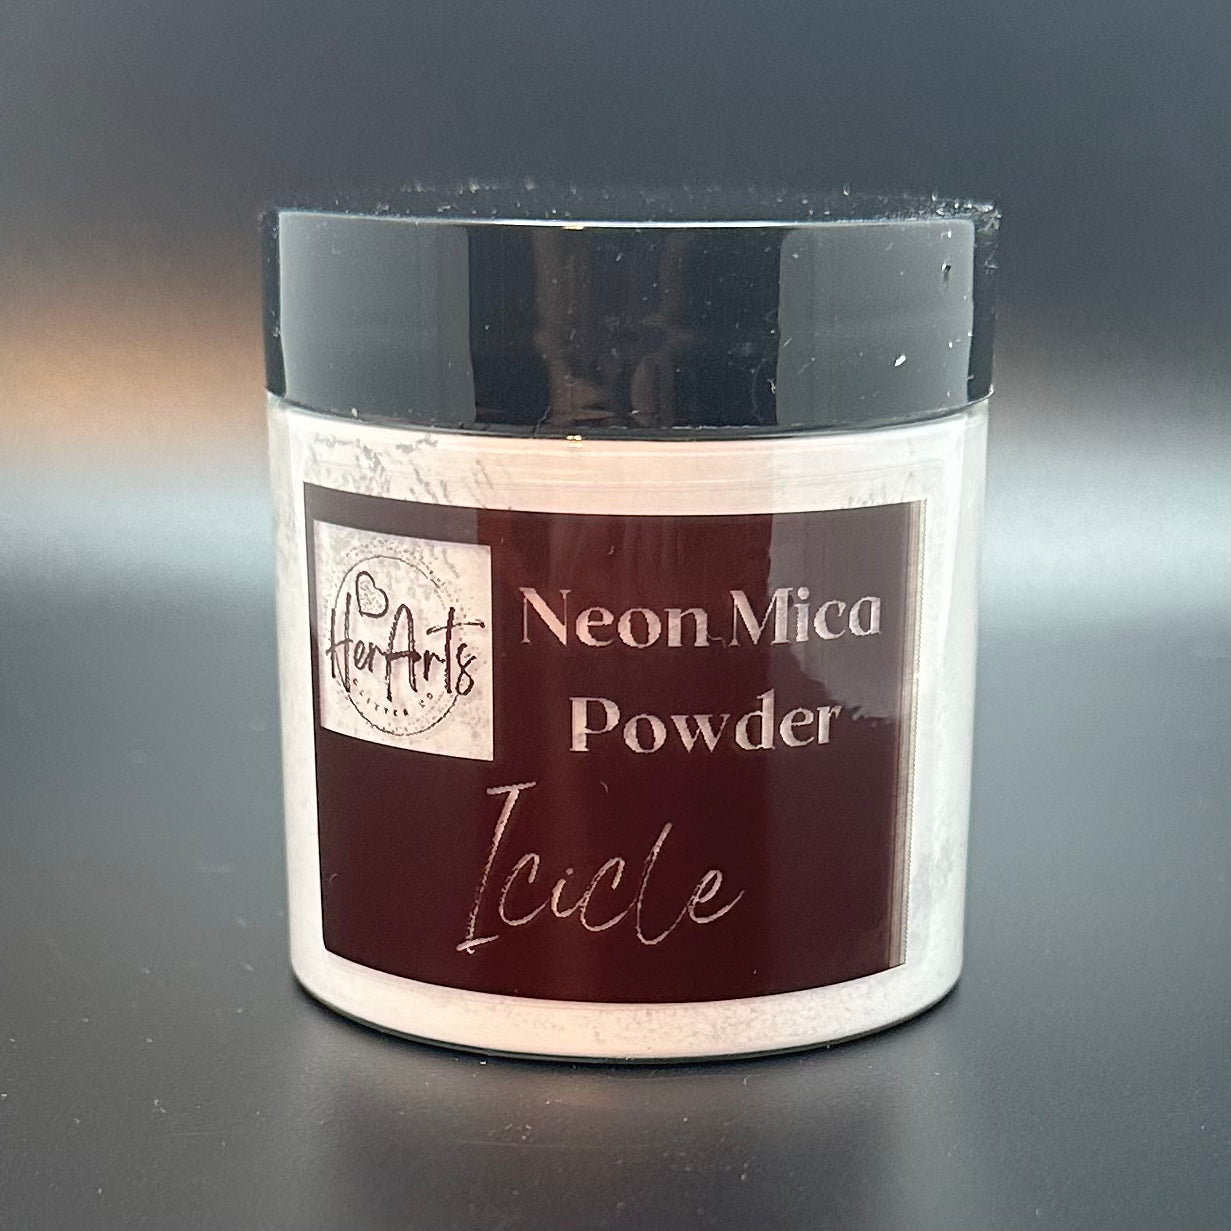 Neon Mica Powder, Icicle